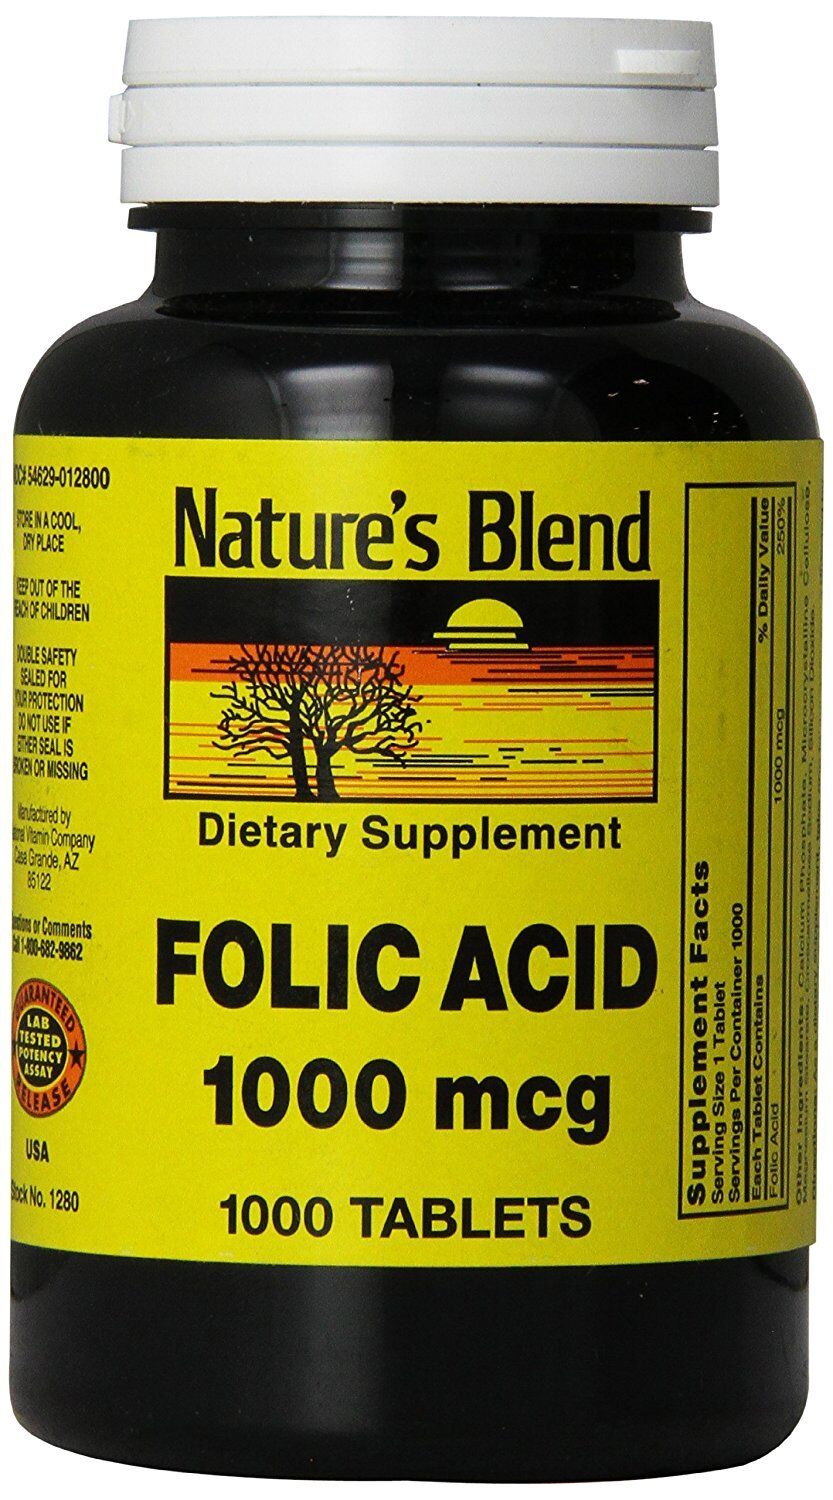 Nature's Blend Folic Acid 1000 mcg ( 1mg ) 1000 Tabs  FRESH PHARMACY STOCK! 